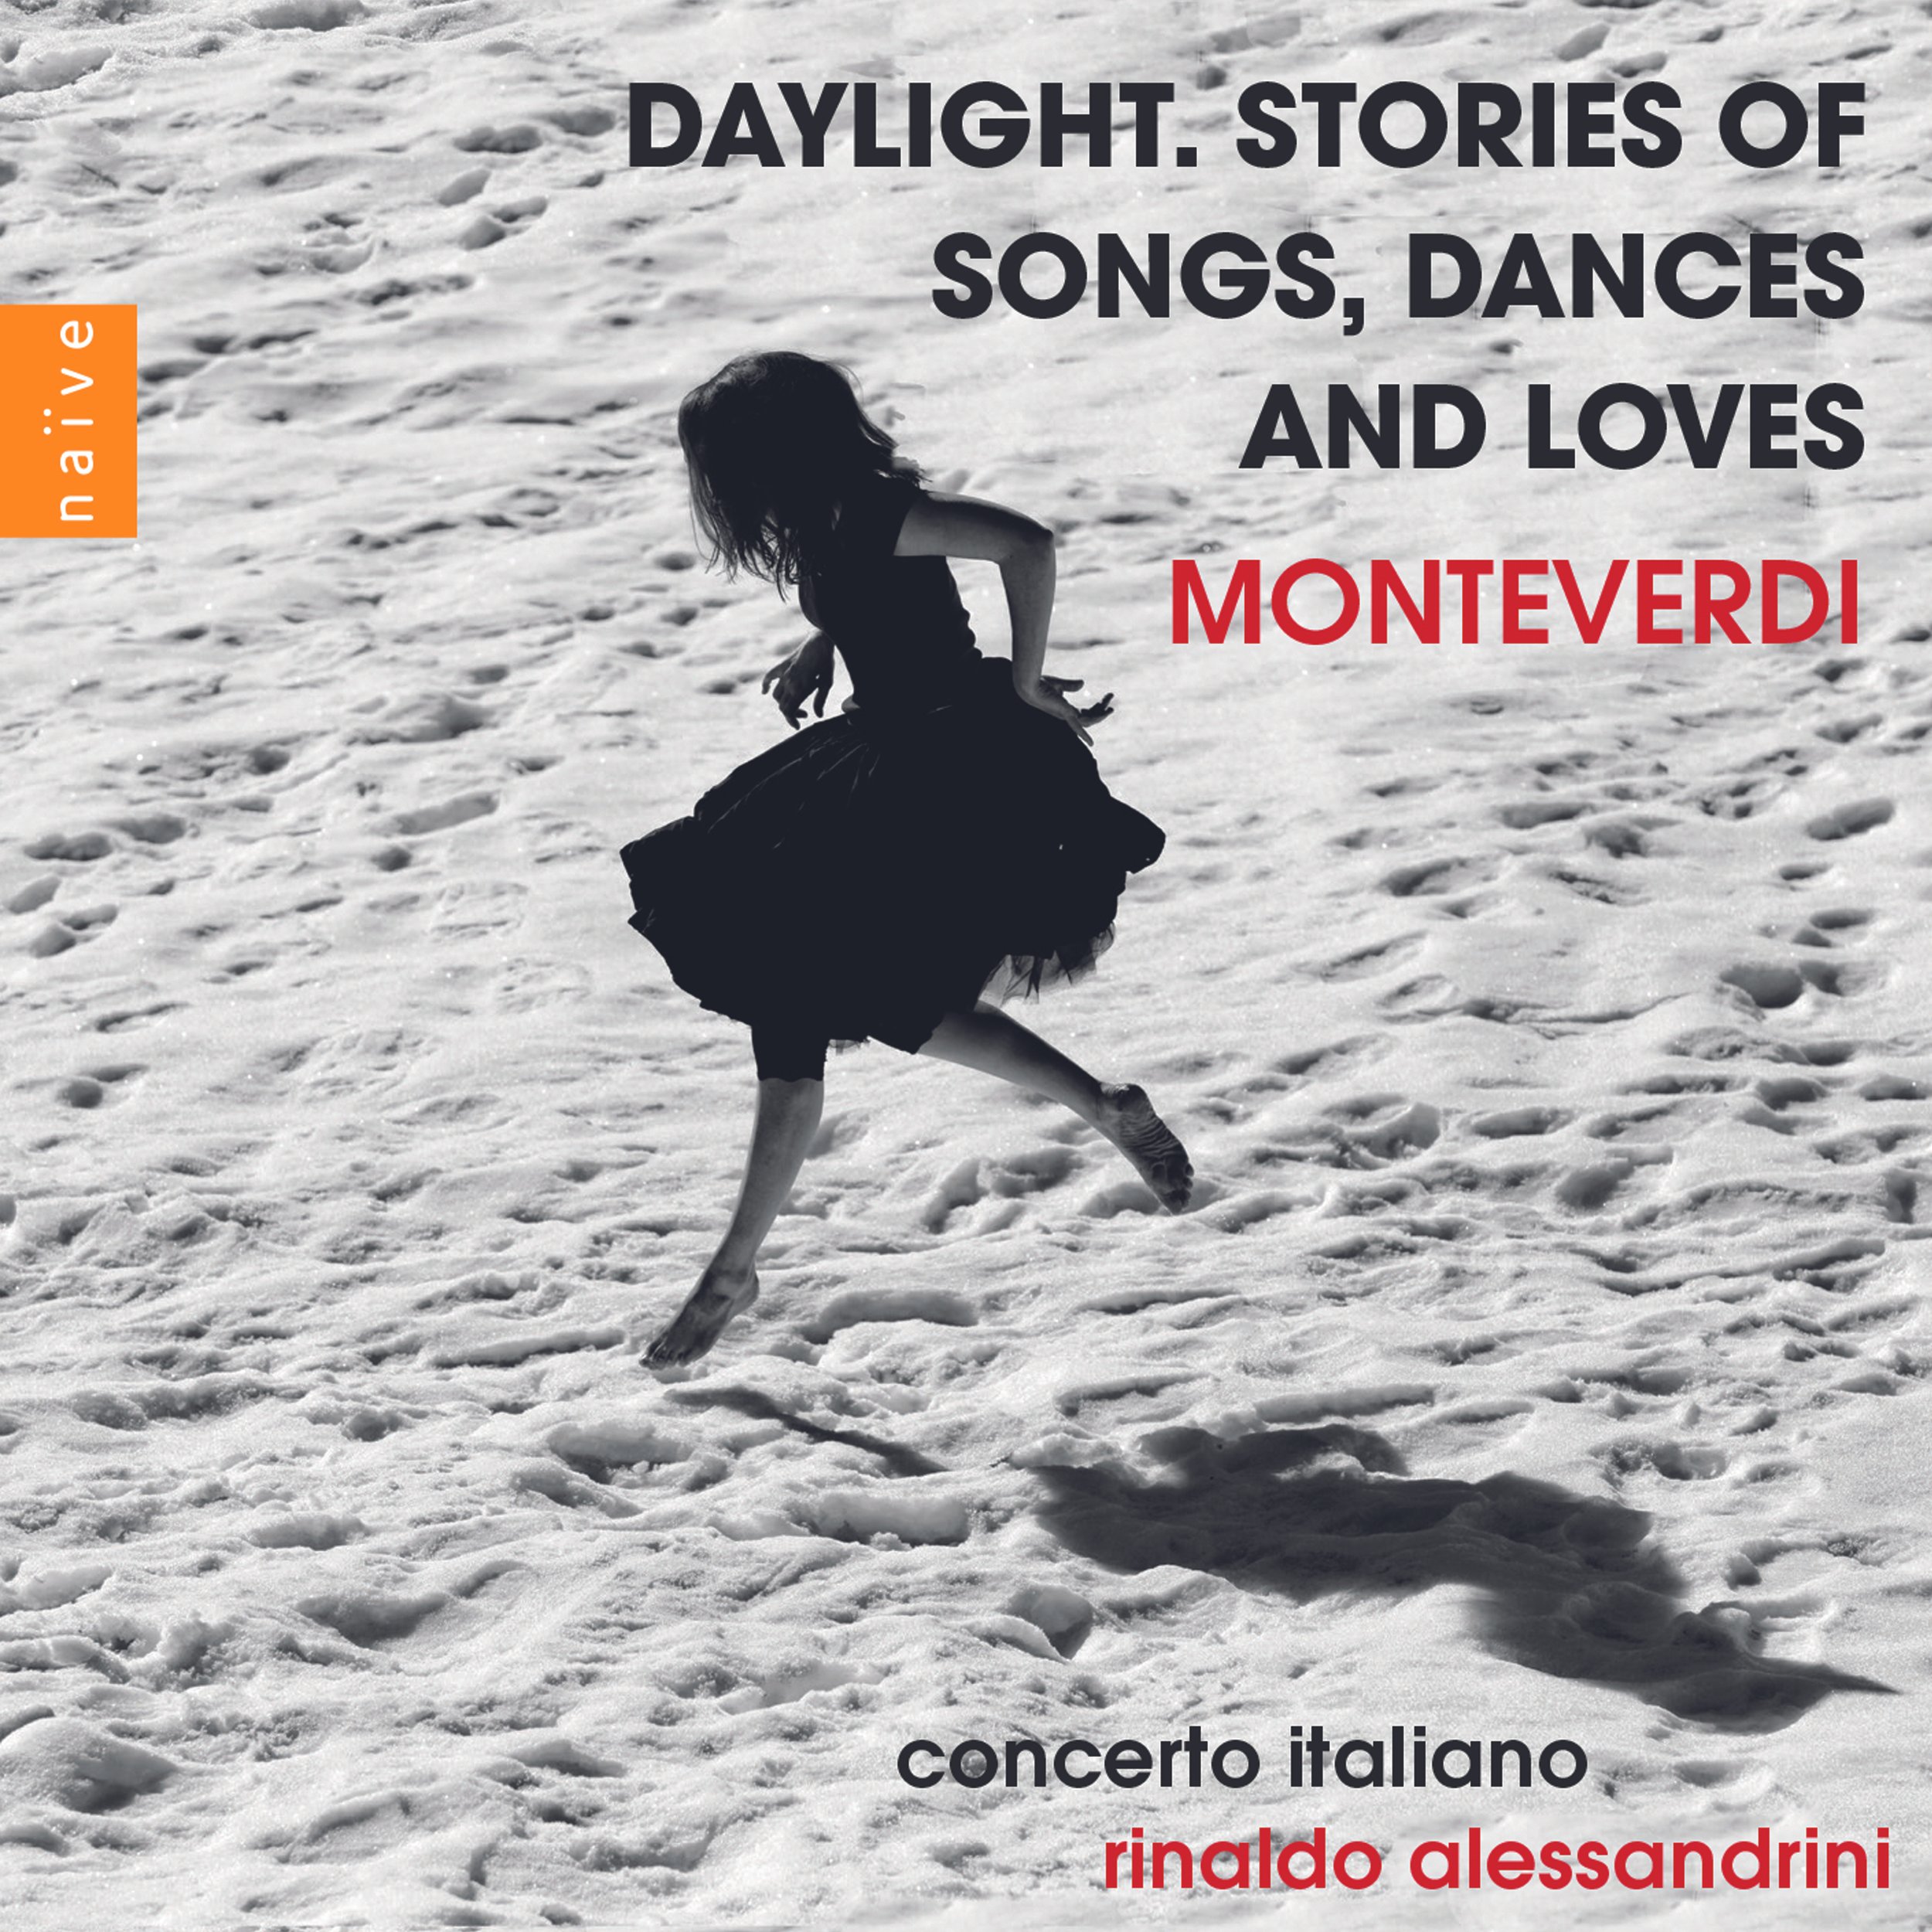 OP7366 K Monteverdi Daylight 3000x3000 (1).jpg